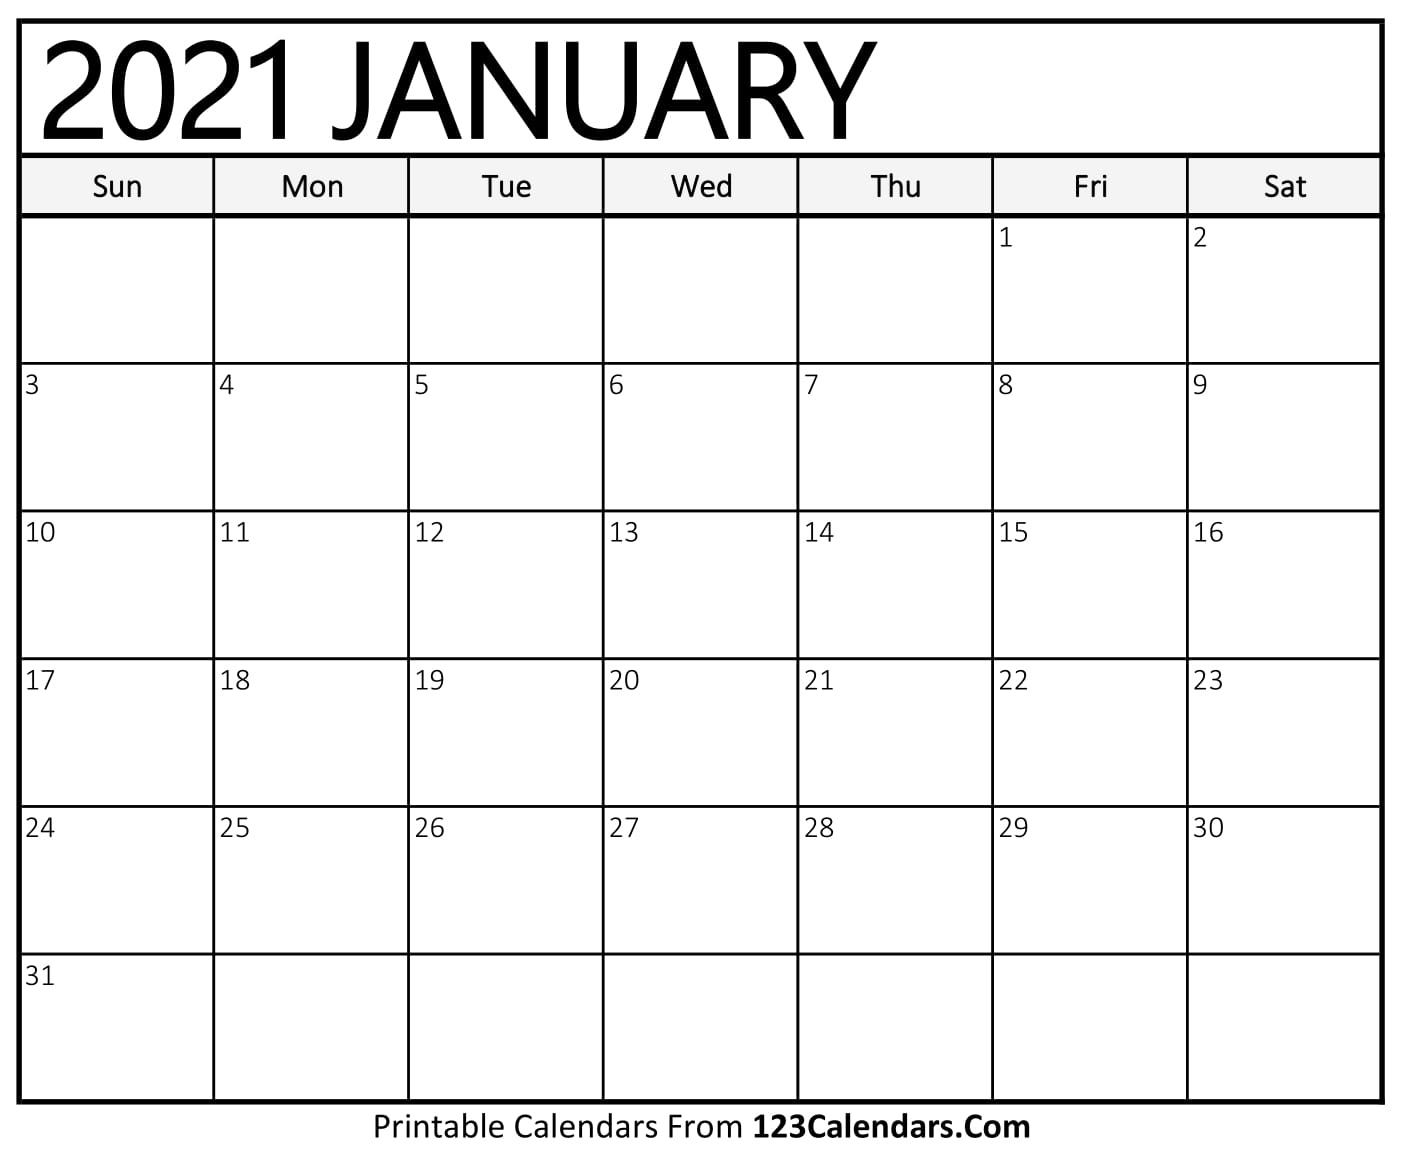 2021 Printable Calendar | 123Calendars 2021 Writable Calendars By Month